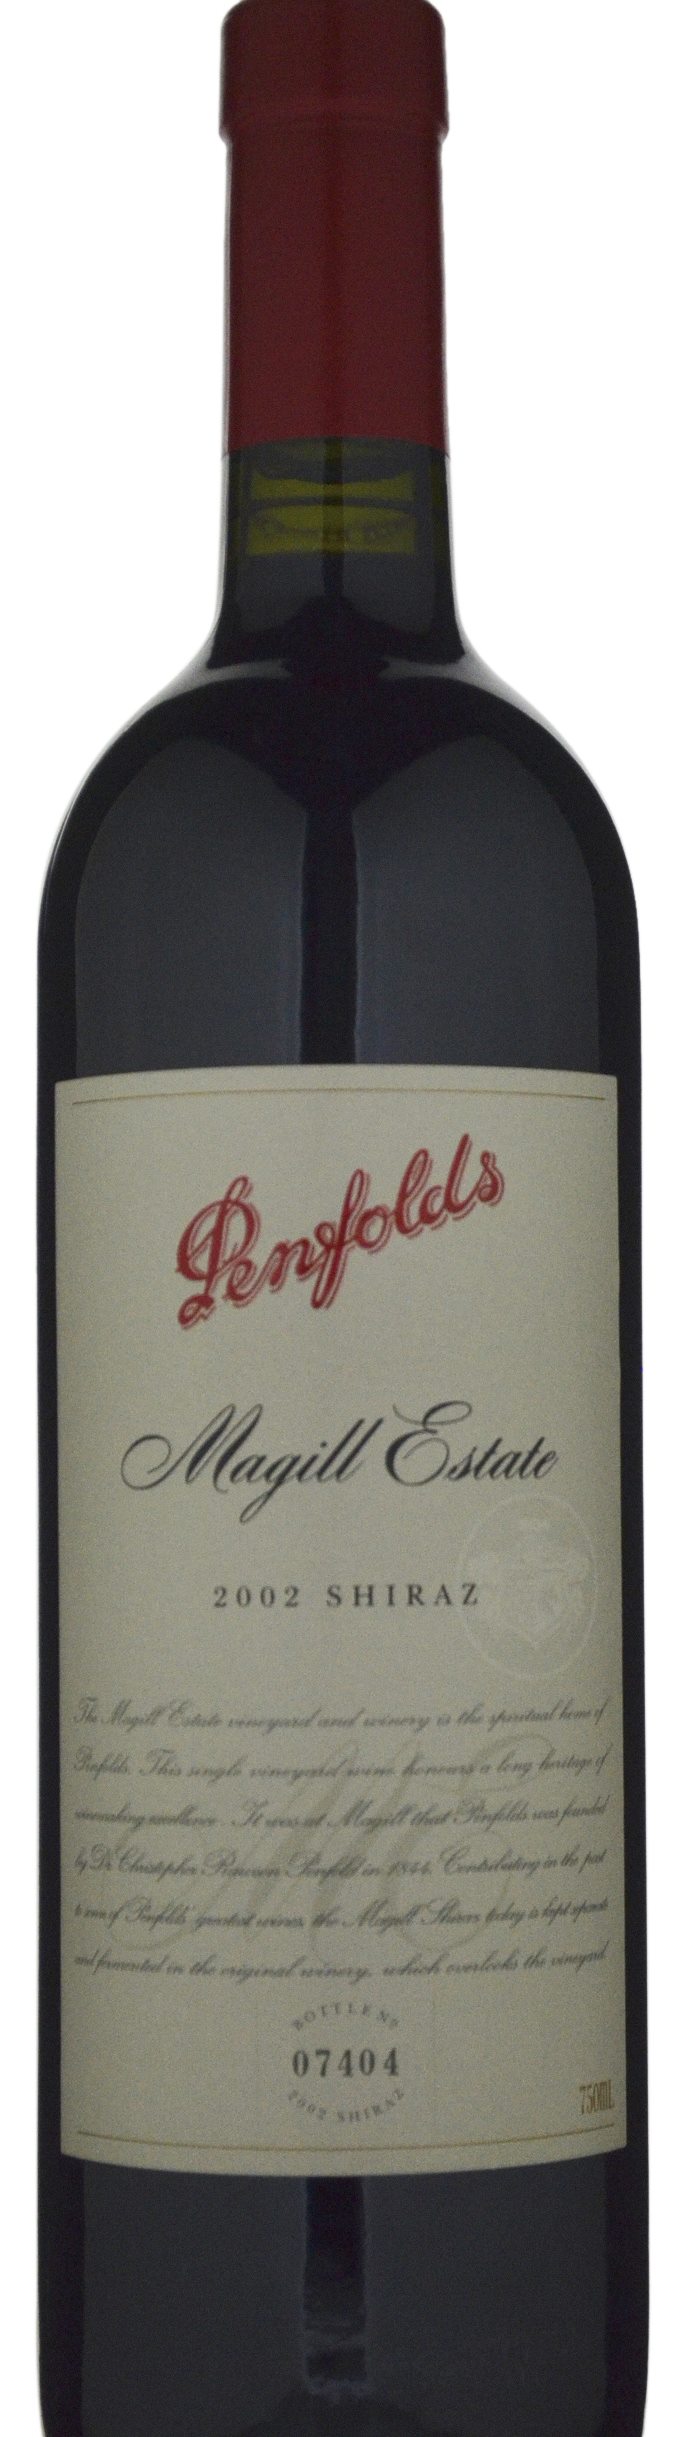 Penfolds Magill Estate Shiraz 2002